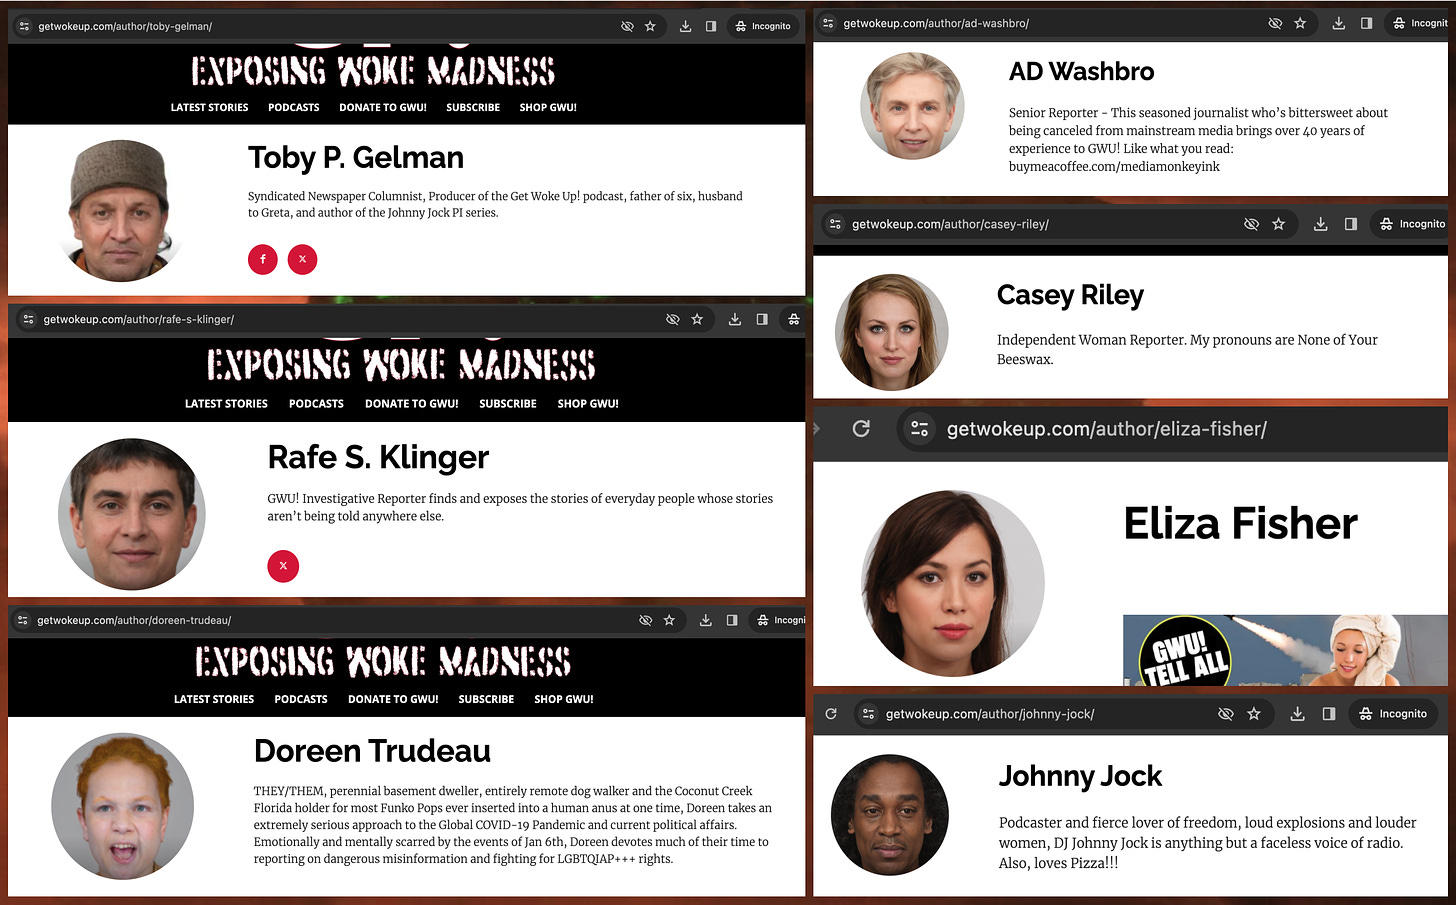 screenshot of 7 alleged getwokeup.com authors with GAN-generated faces: Toby P. Gelman, Rafe S. Klinger, Doreen Trudeau, AD Washbro, Casey Riley, Eliza Fisher, Johnny Jock